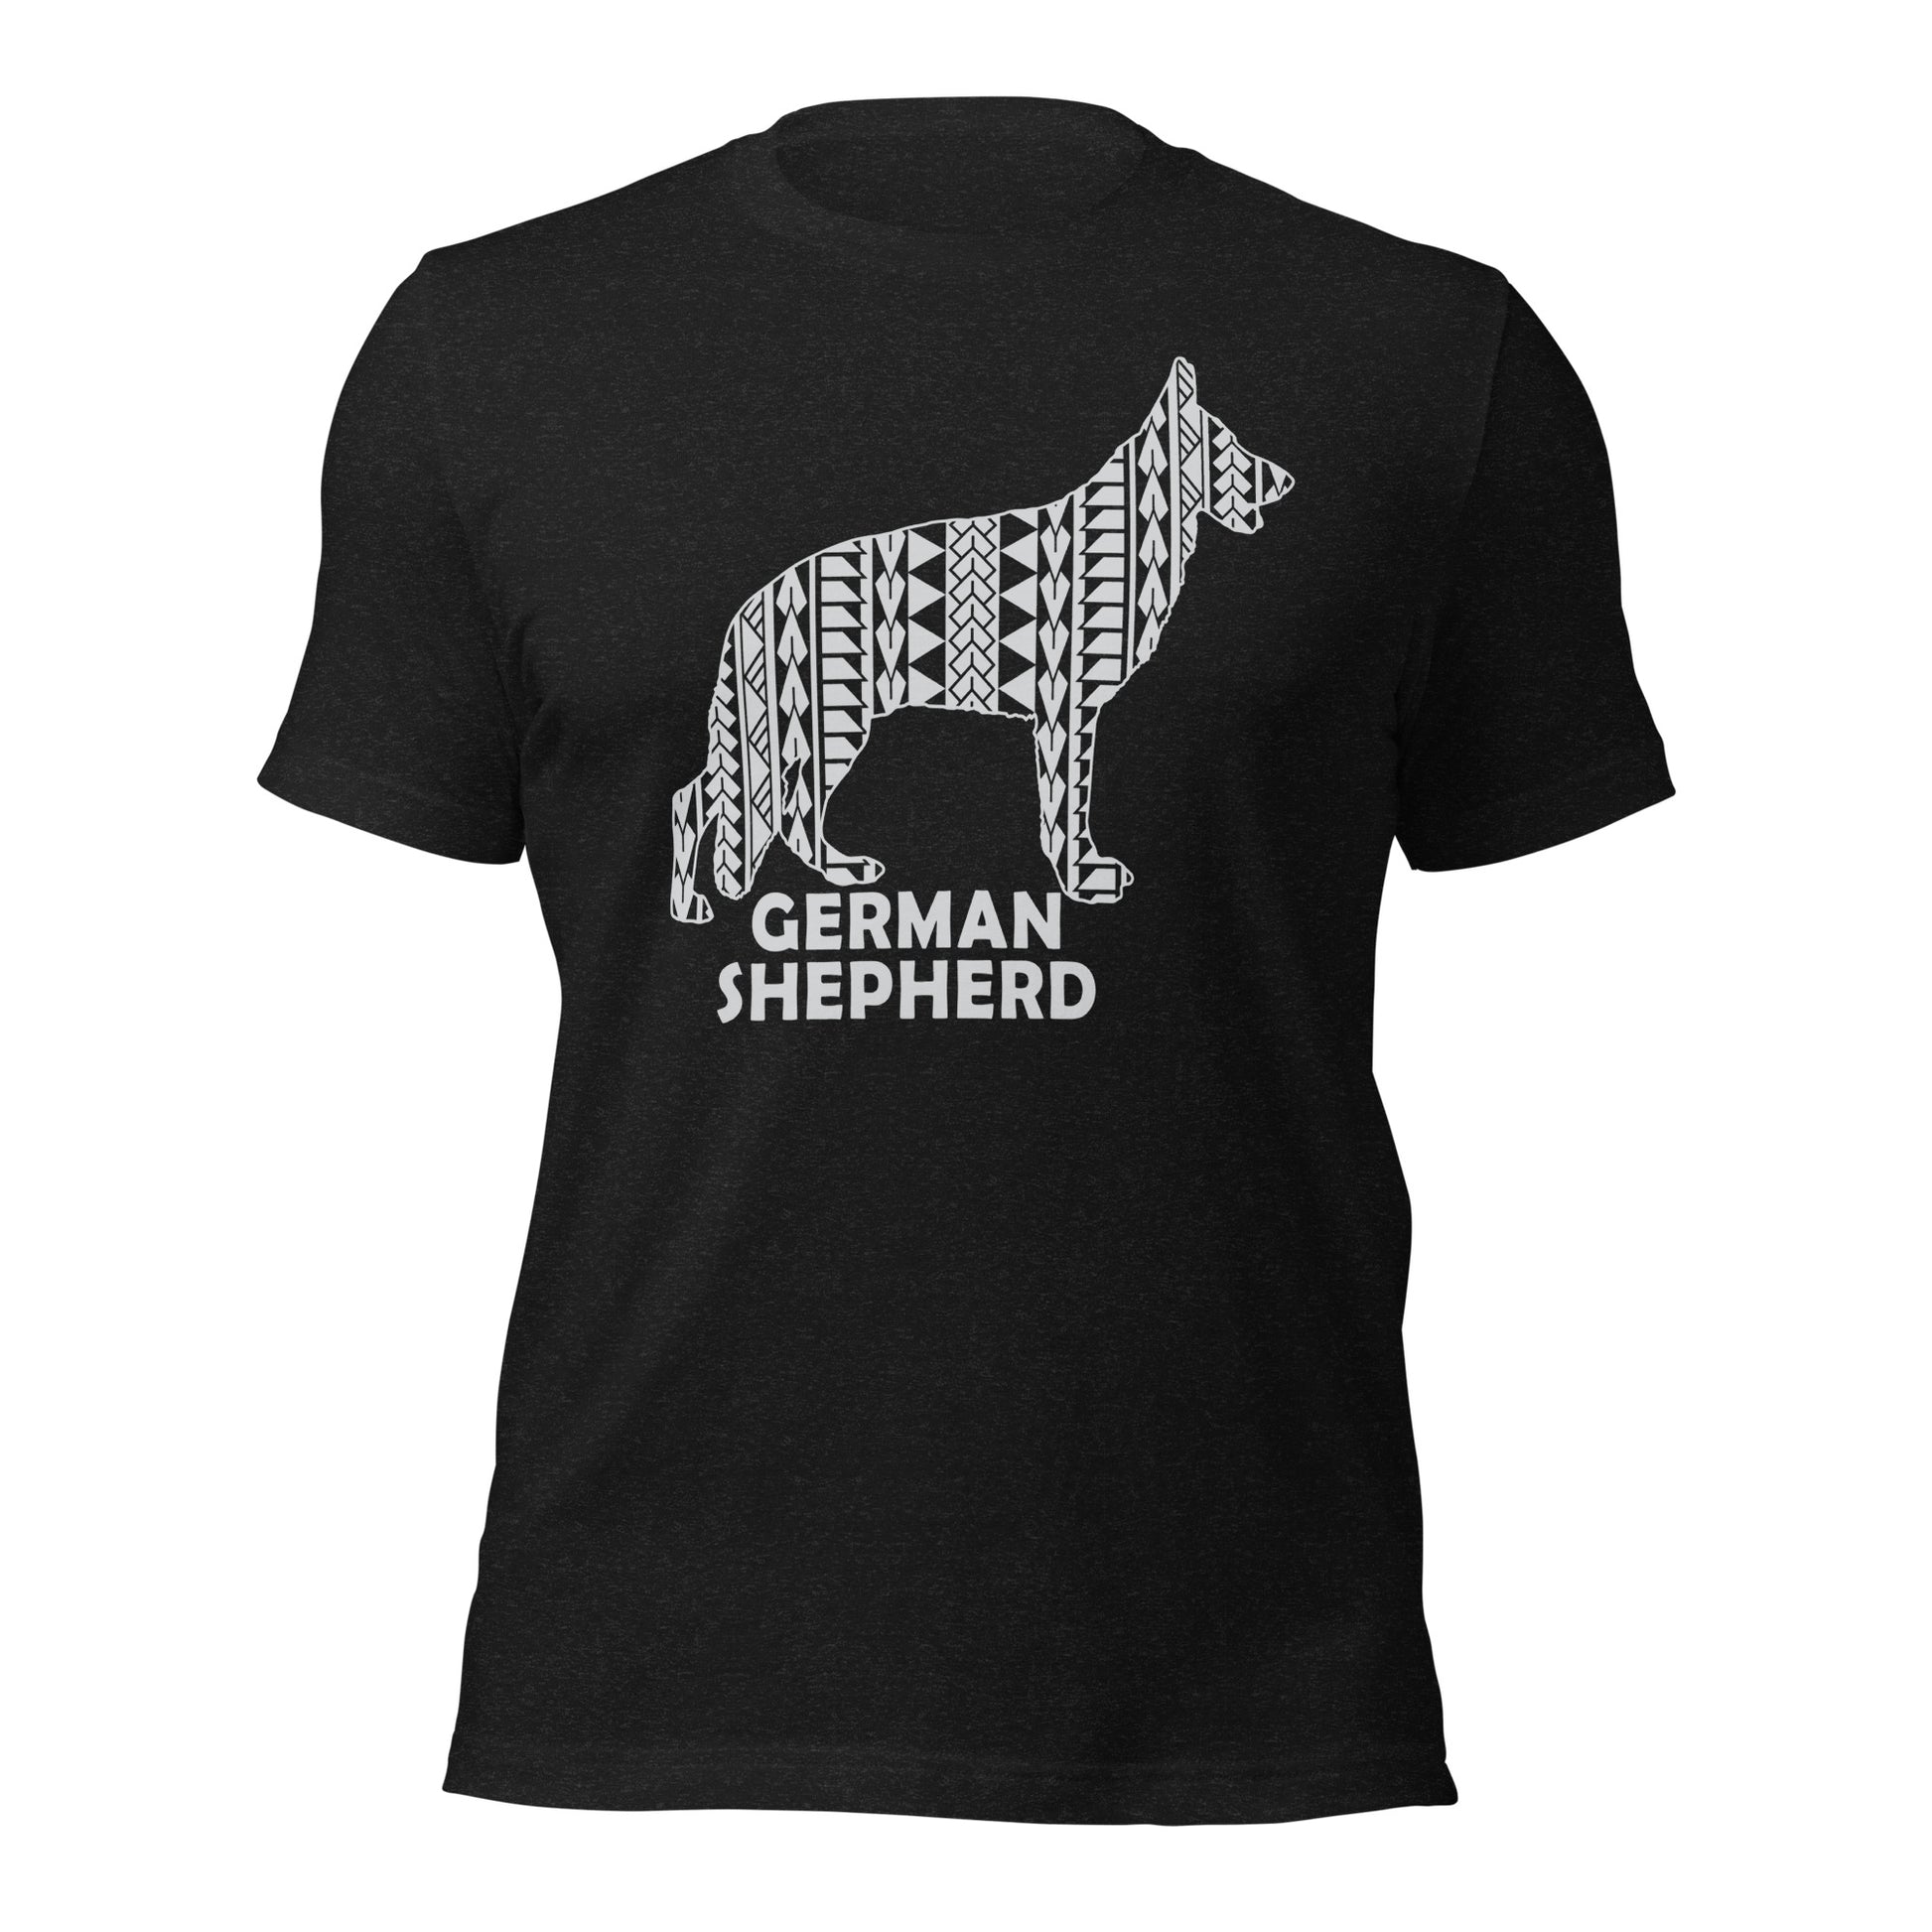 German Shepherd Polynesian t-shirt black heather by Dog Artistry.